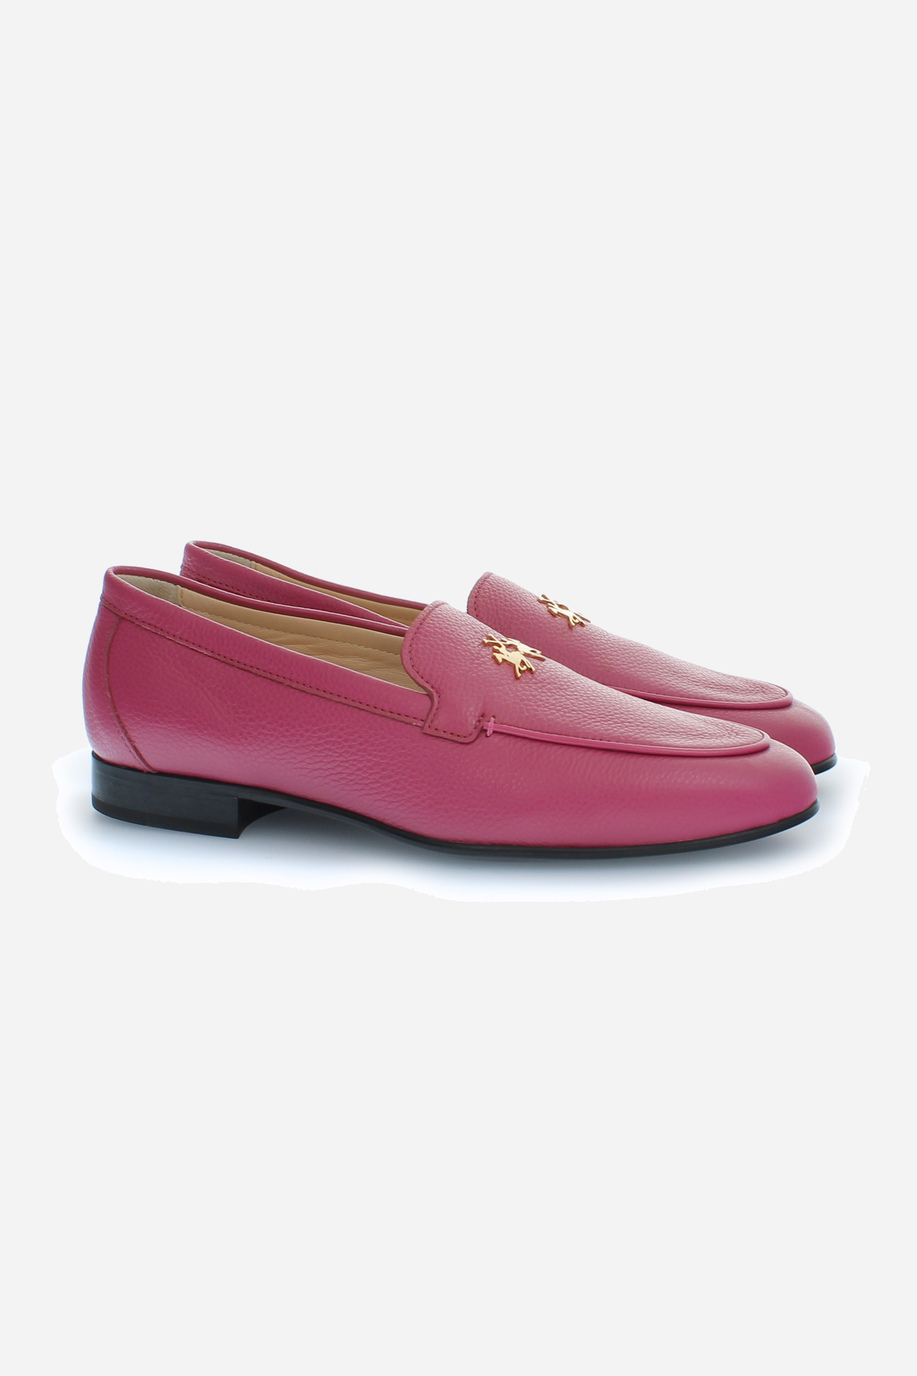 Women's leather loafers - Woman shoes | La Martina - Official Online Shop